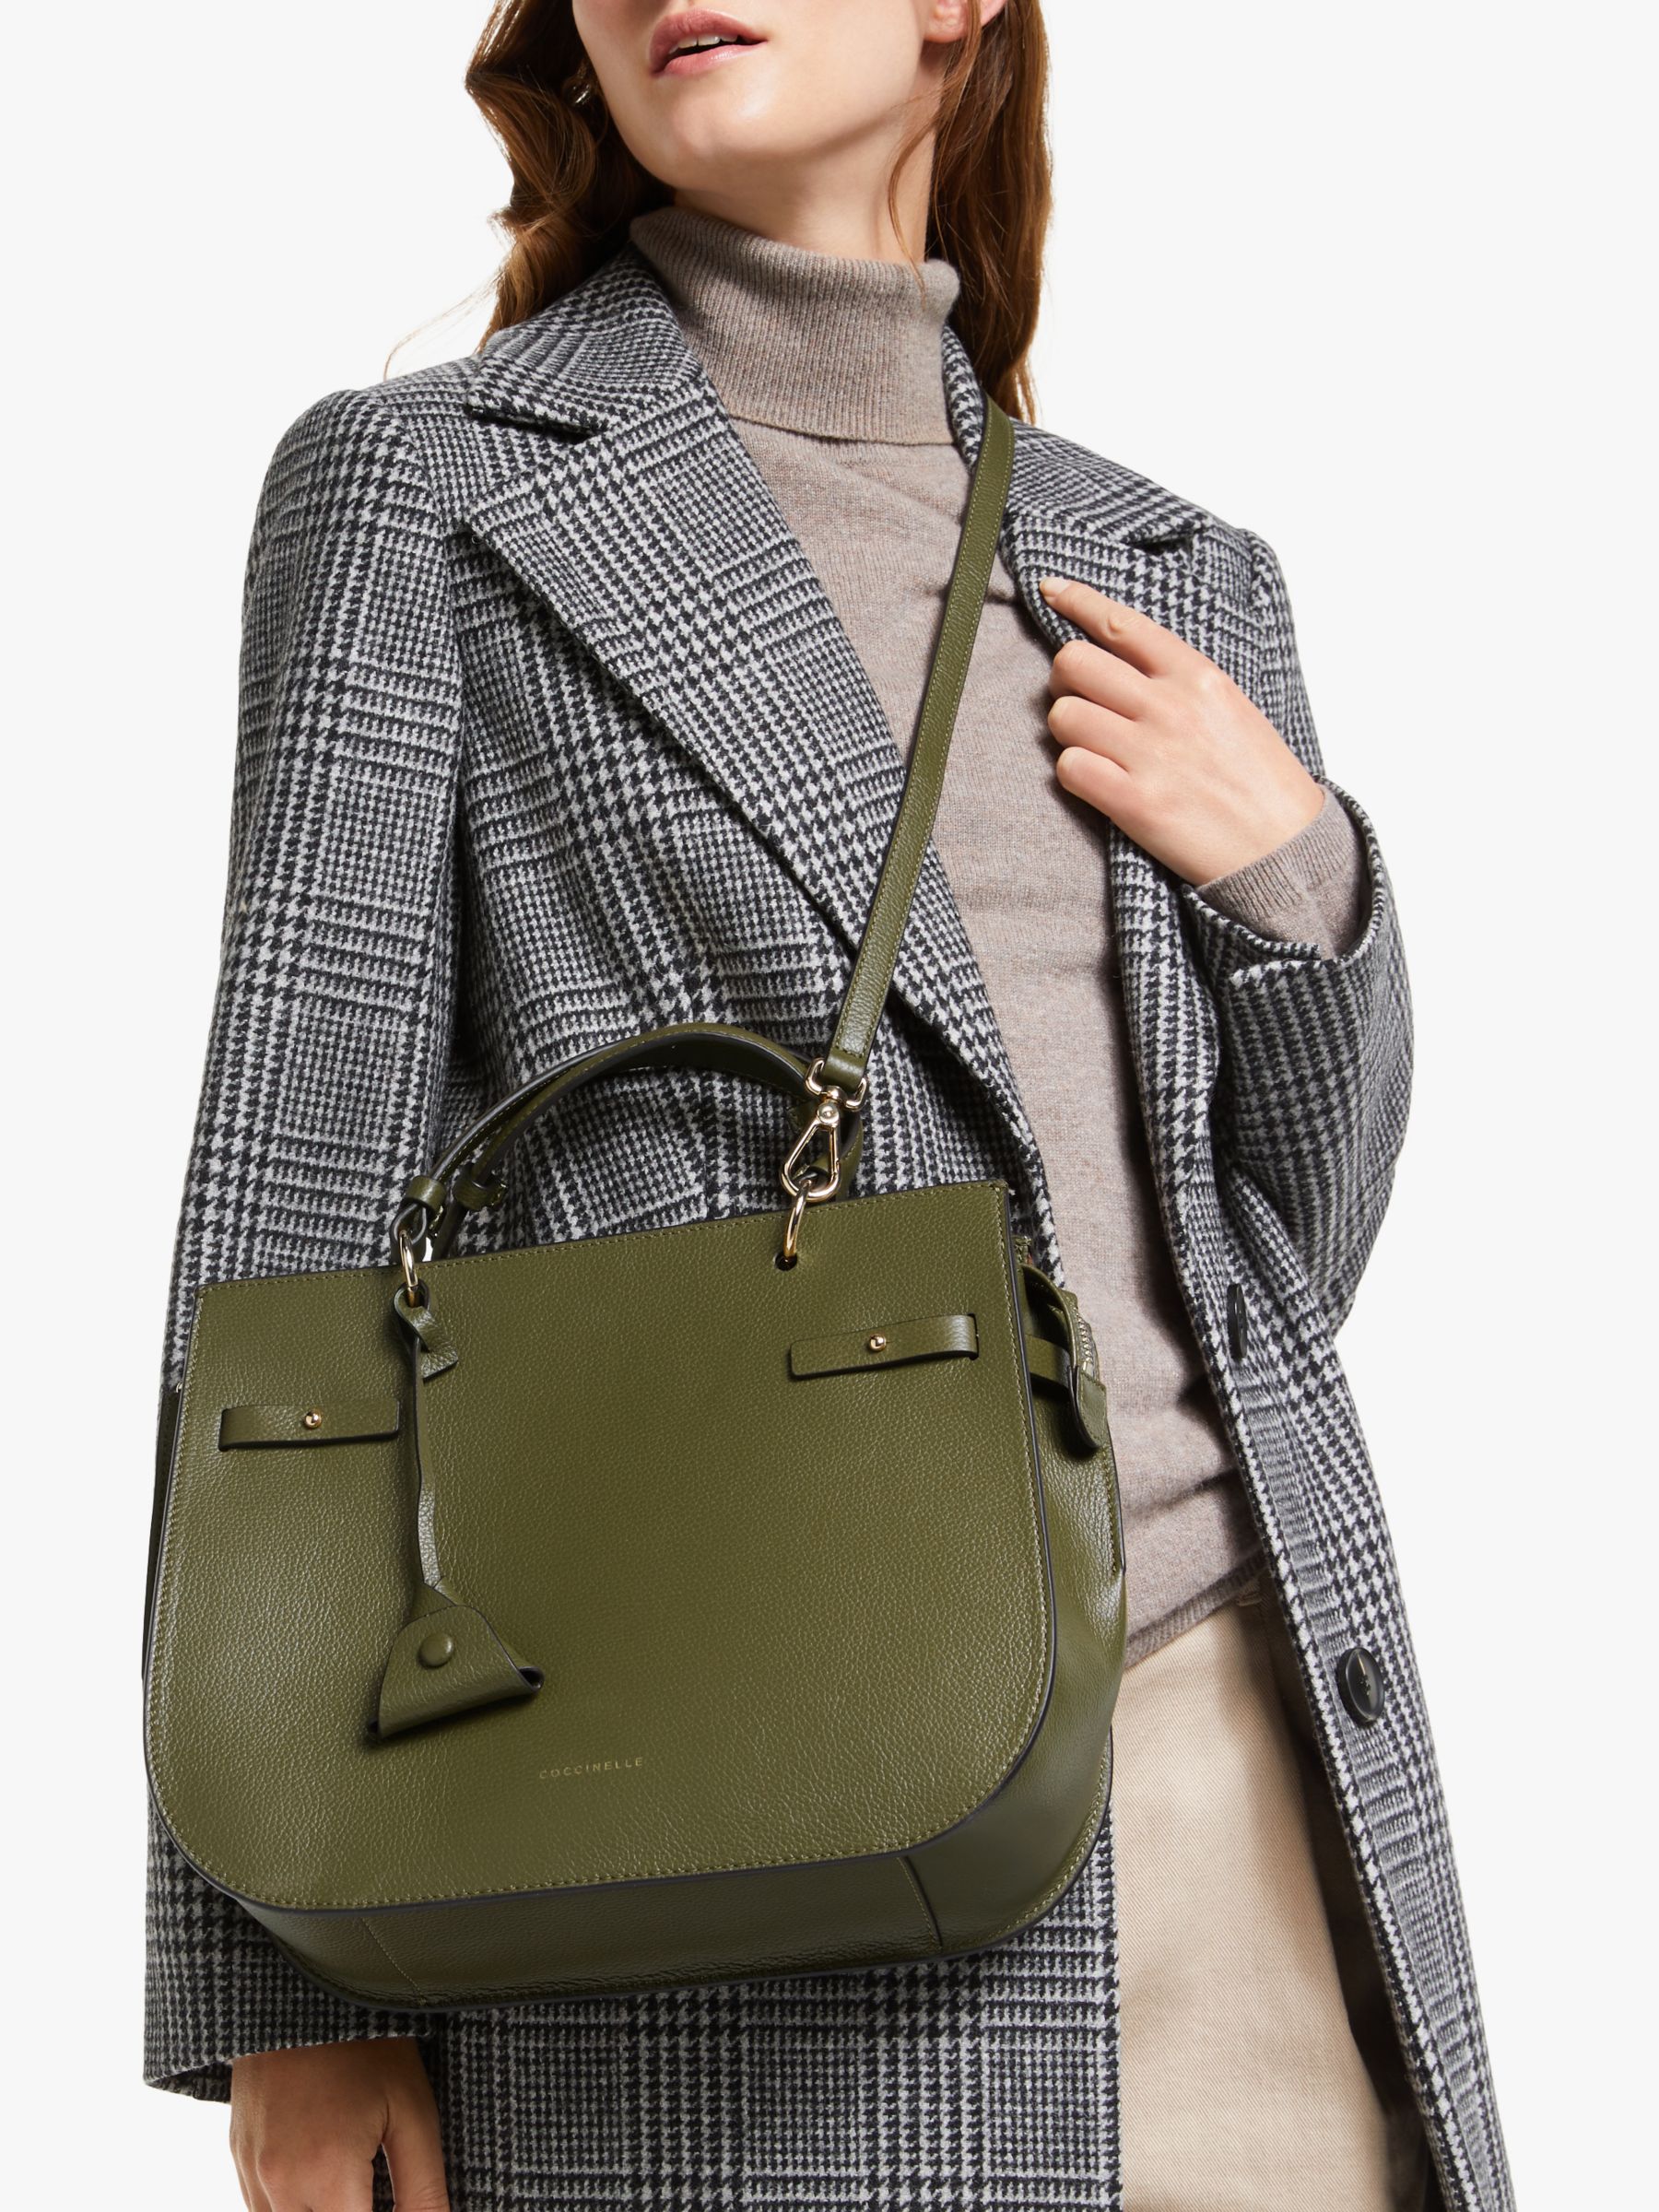 Coccinelle Didi Cabas Leather Shoulder Bag, Green